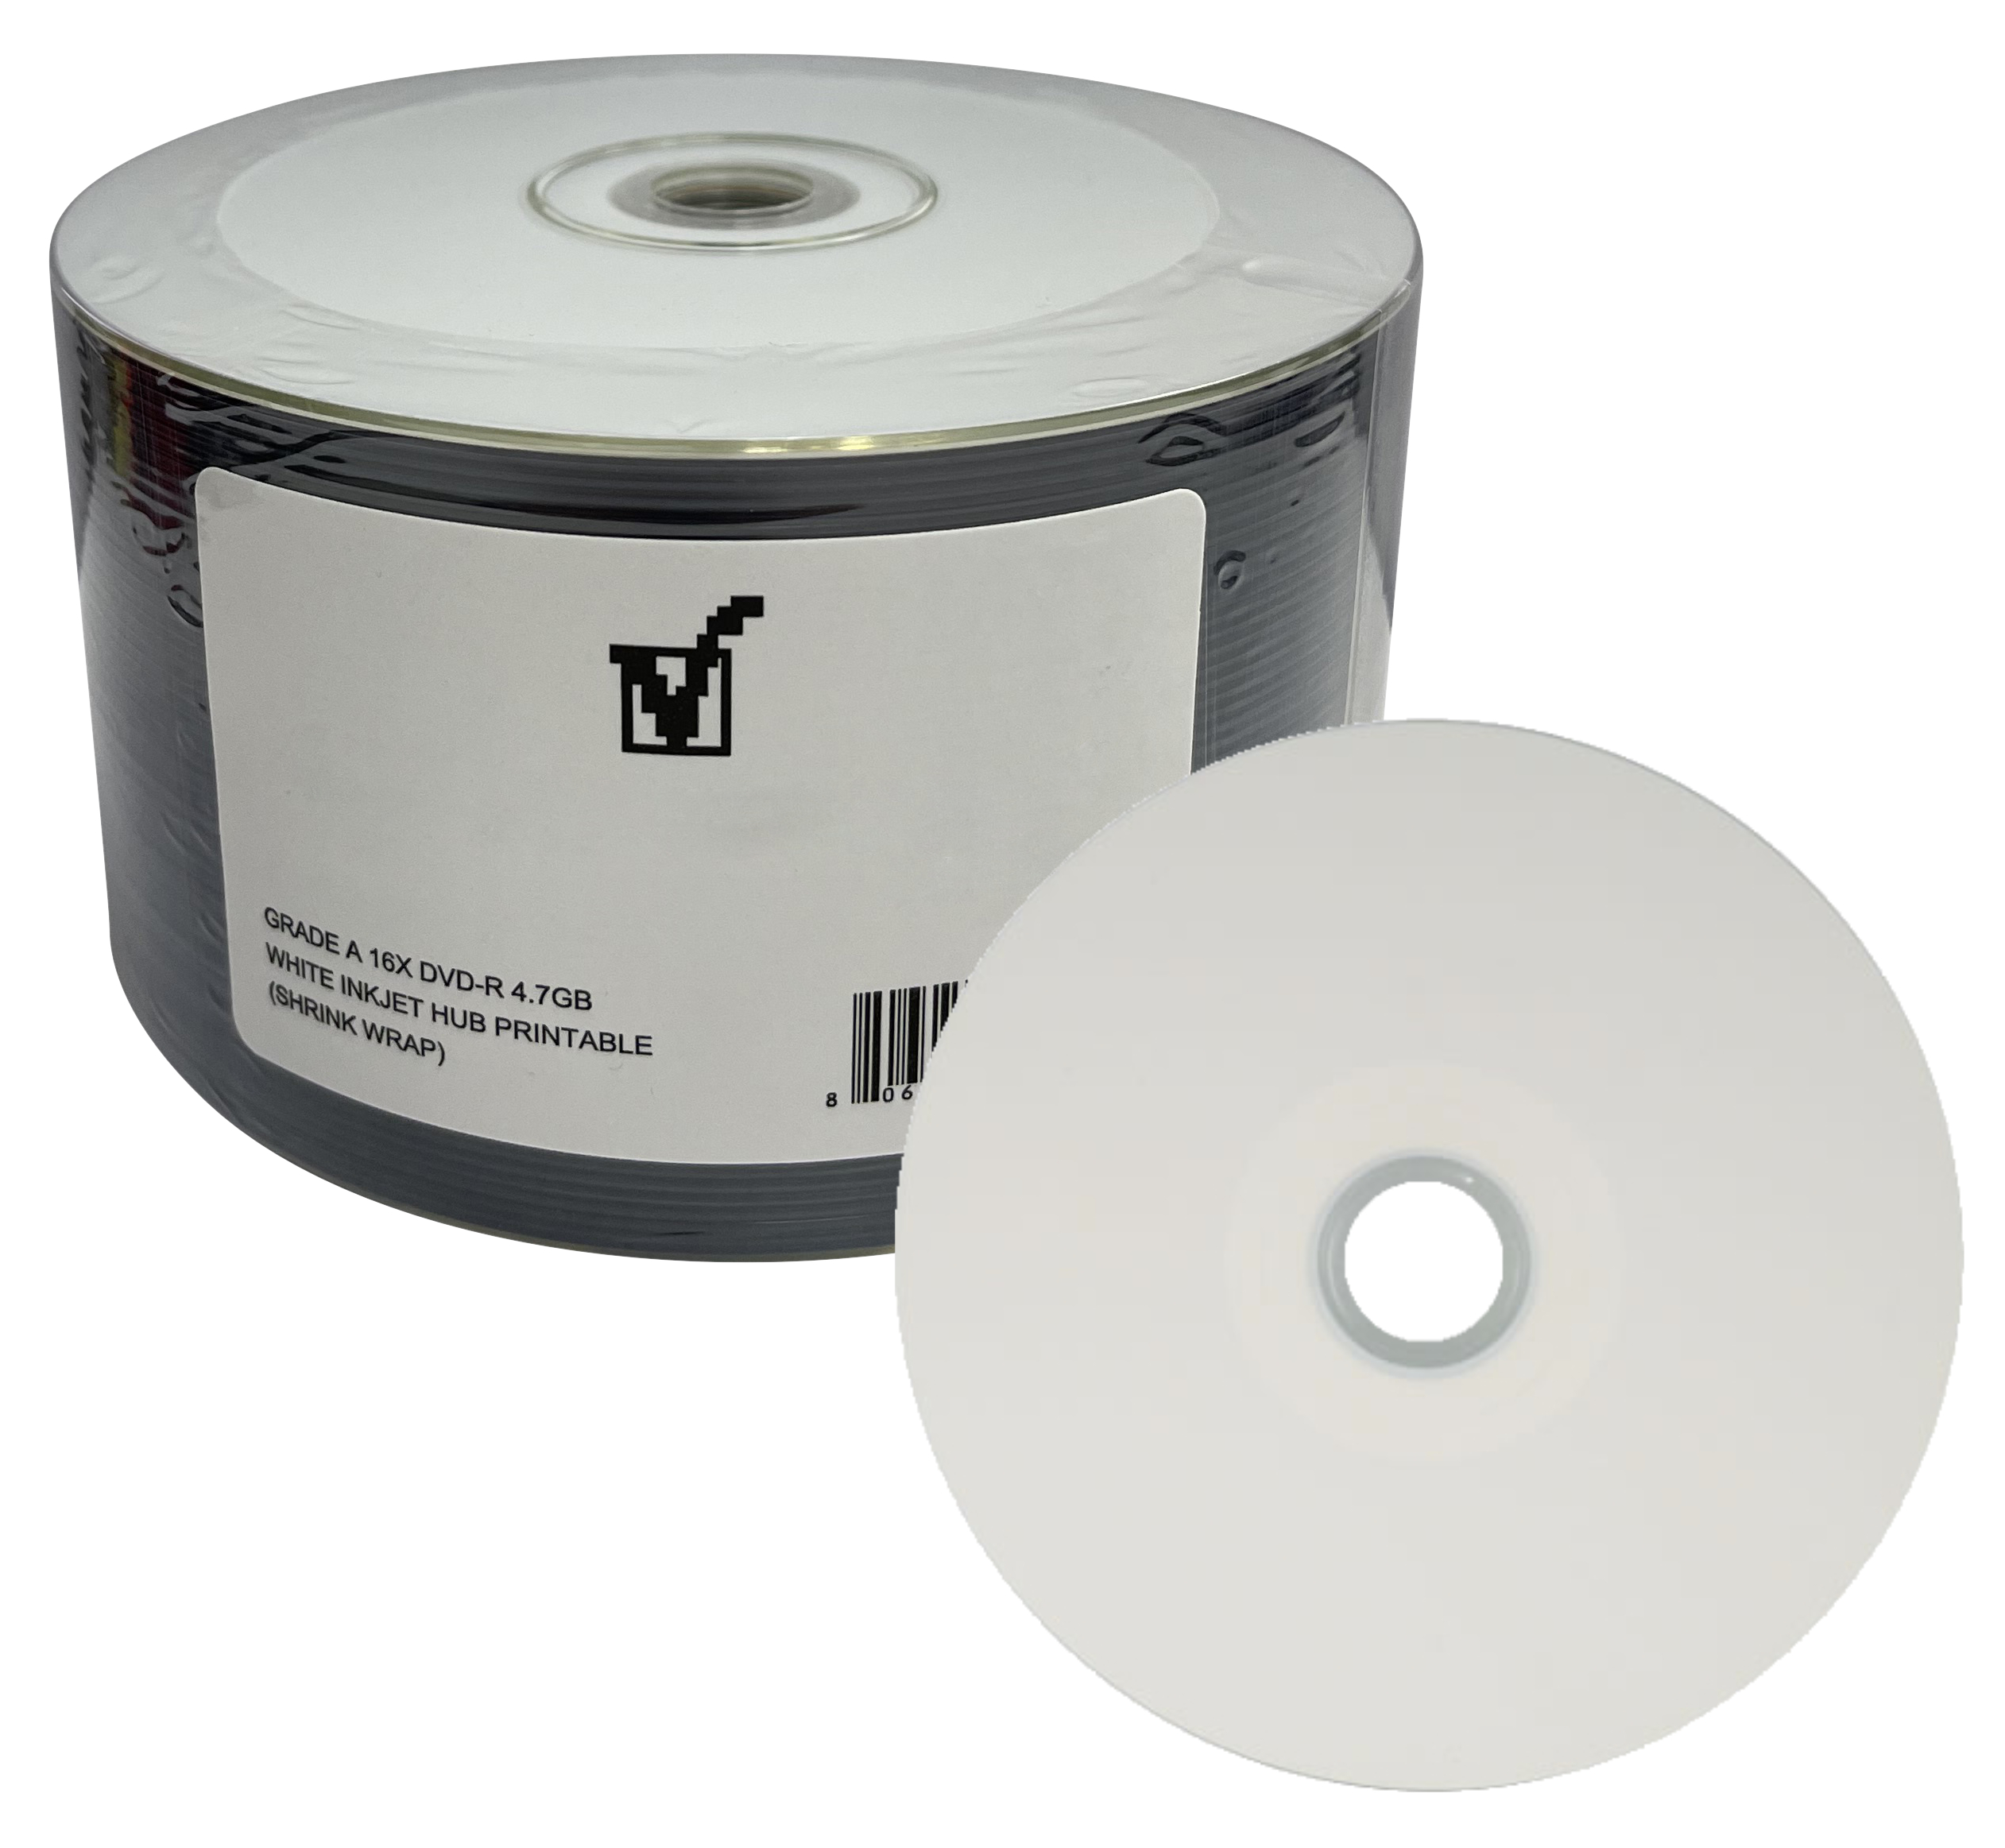 Image of ID 1214261544 6000 Grade A 16X DVD-R 47GB White Inkjet Hub Printable (Shrink Wrap)